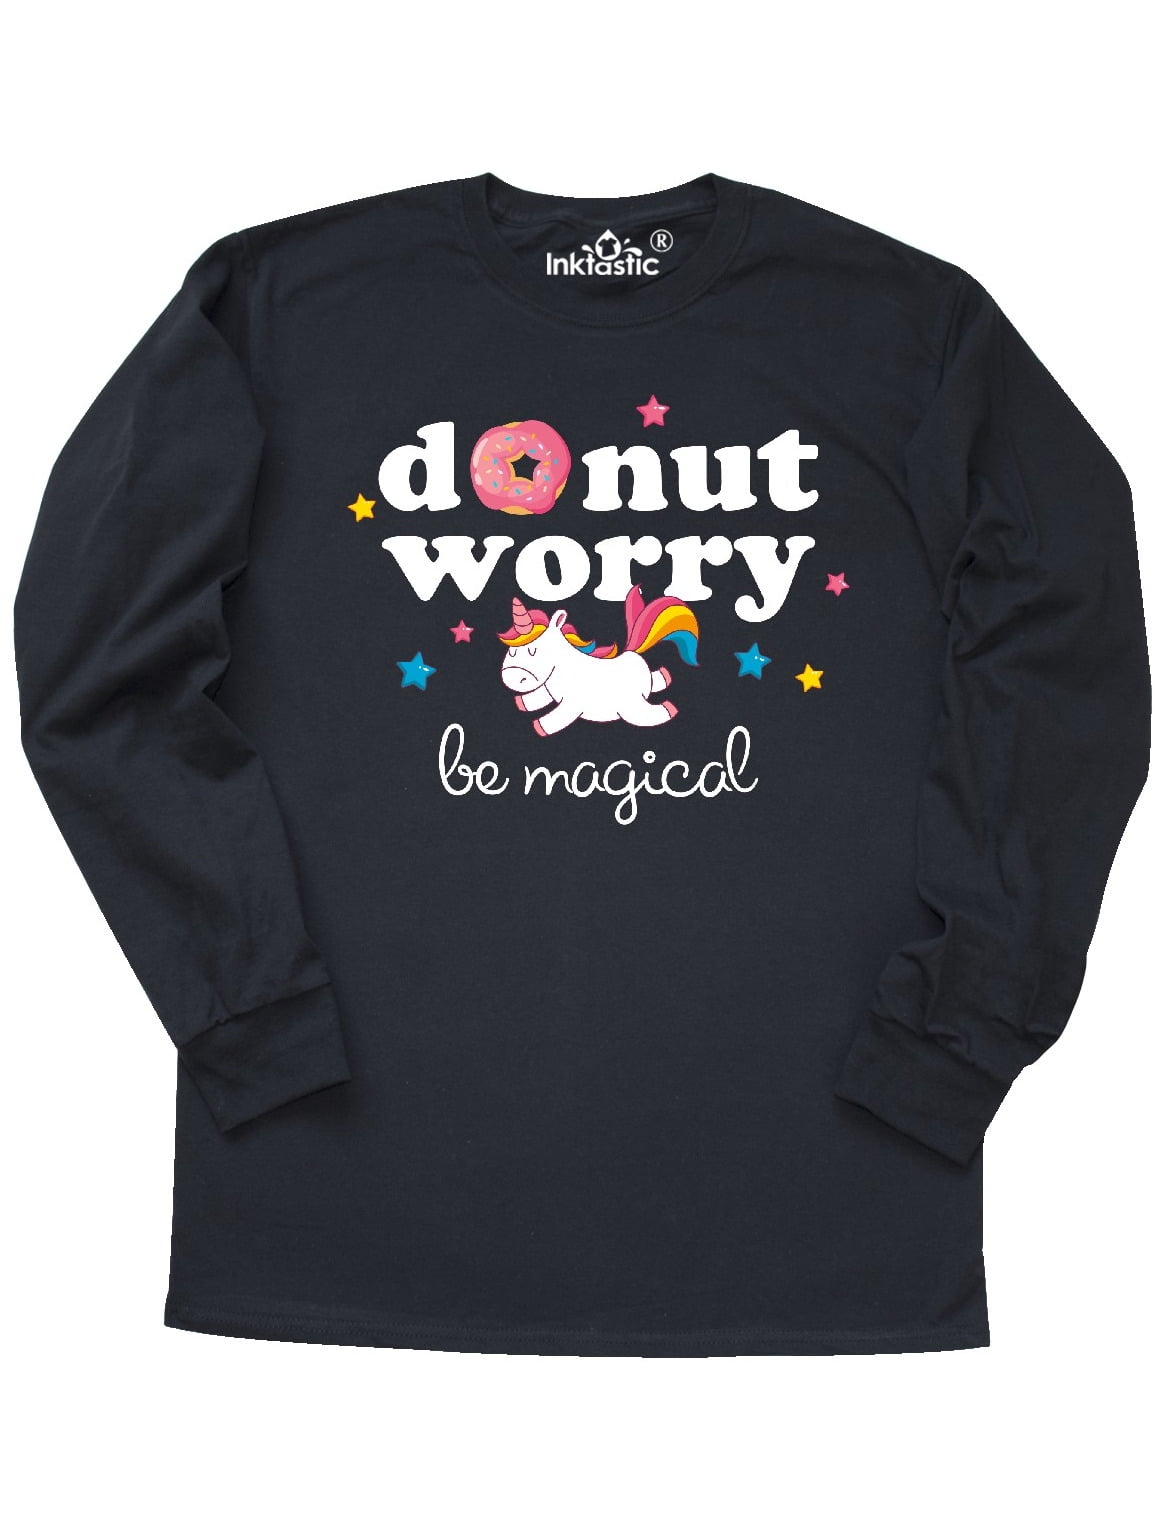 inktastic Donut Worry Unicorn Toddler T-Shirt